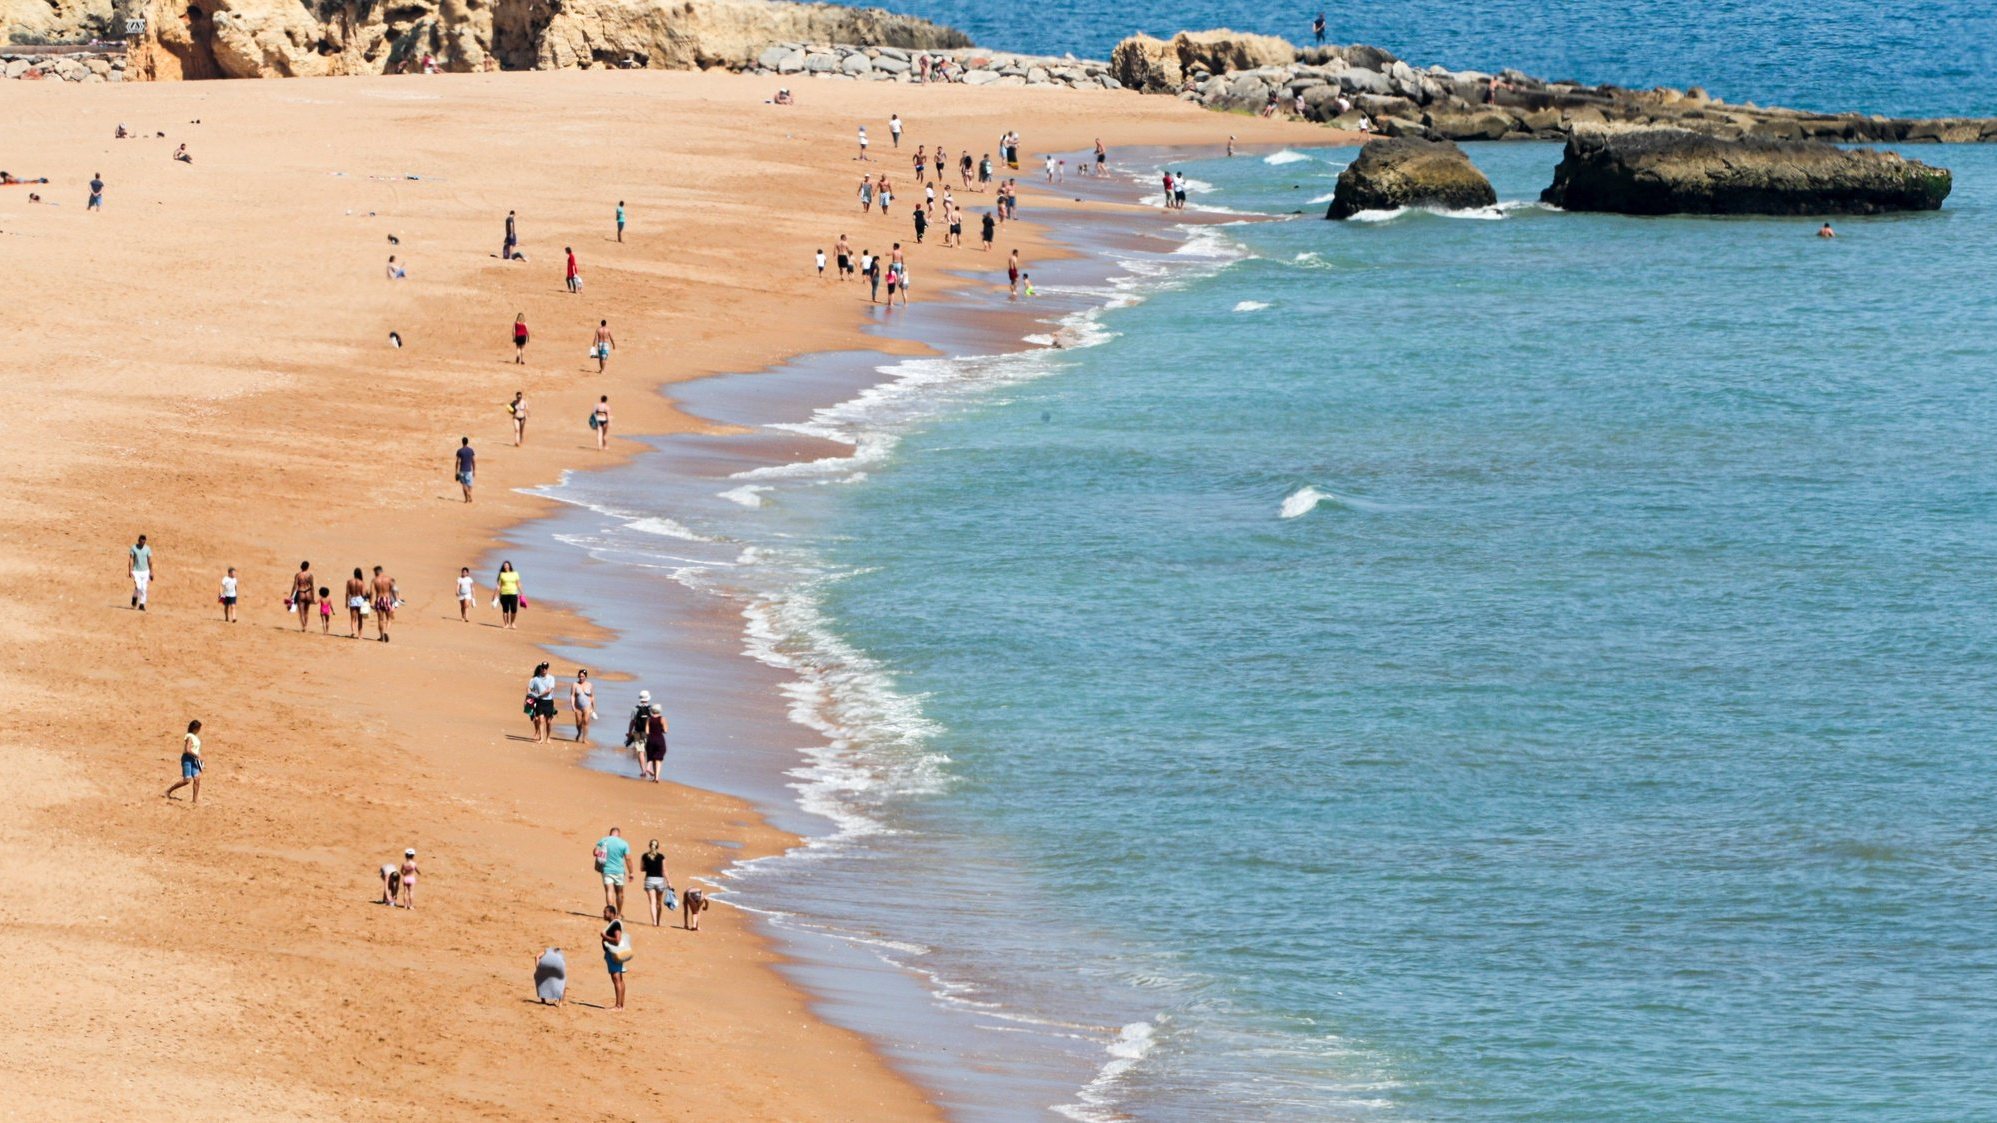 A temperatura da água na costa algarvia está entre os 18 e os 20 ºC